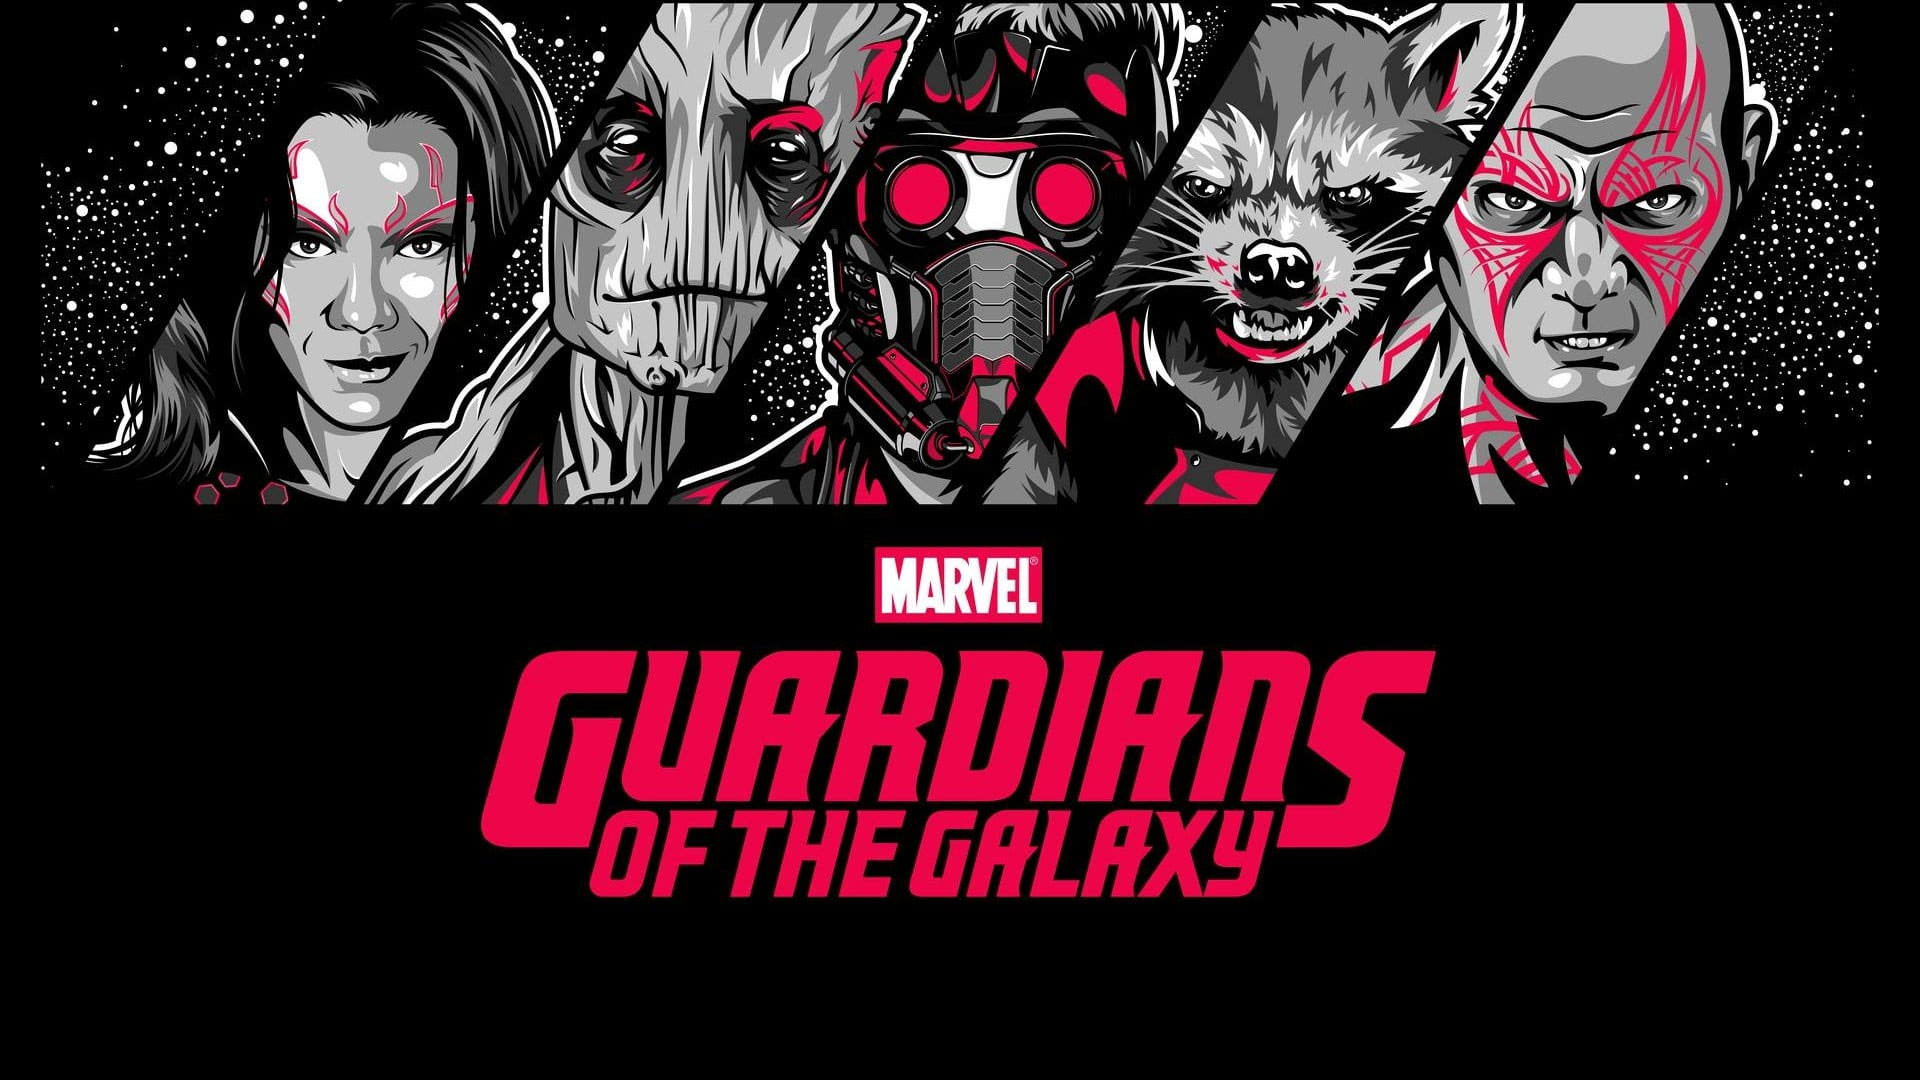 Marvel Guardians Of The Galaxy Wallpaper - Wallpaperforu